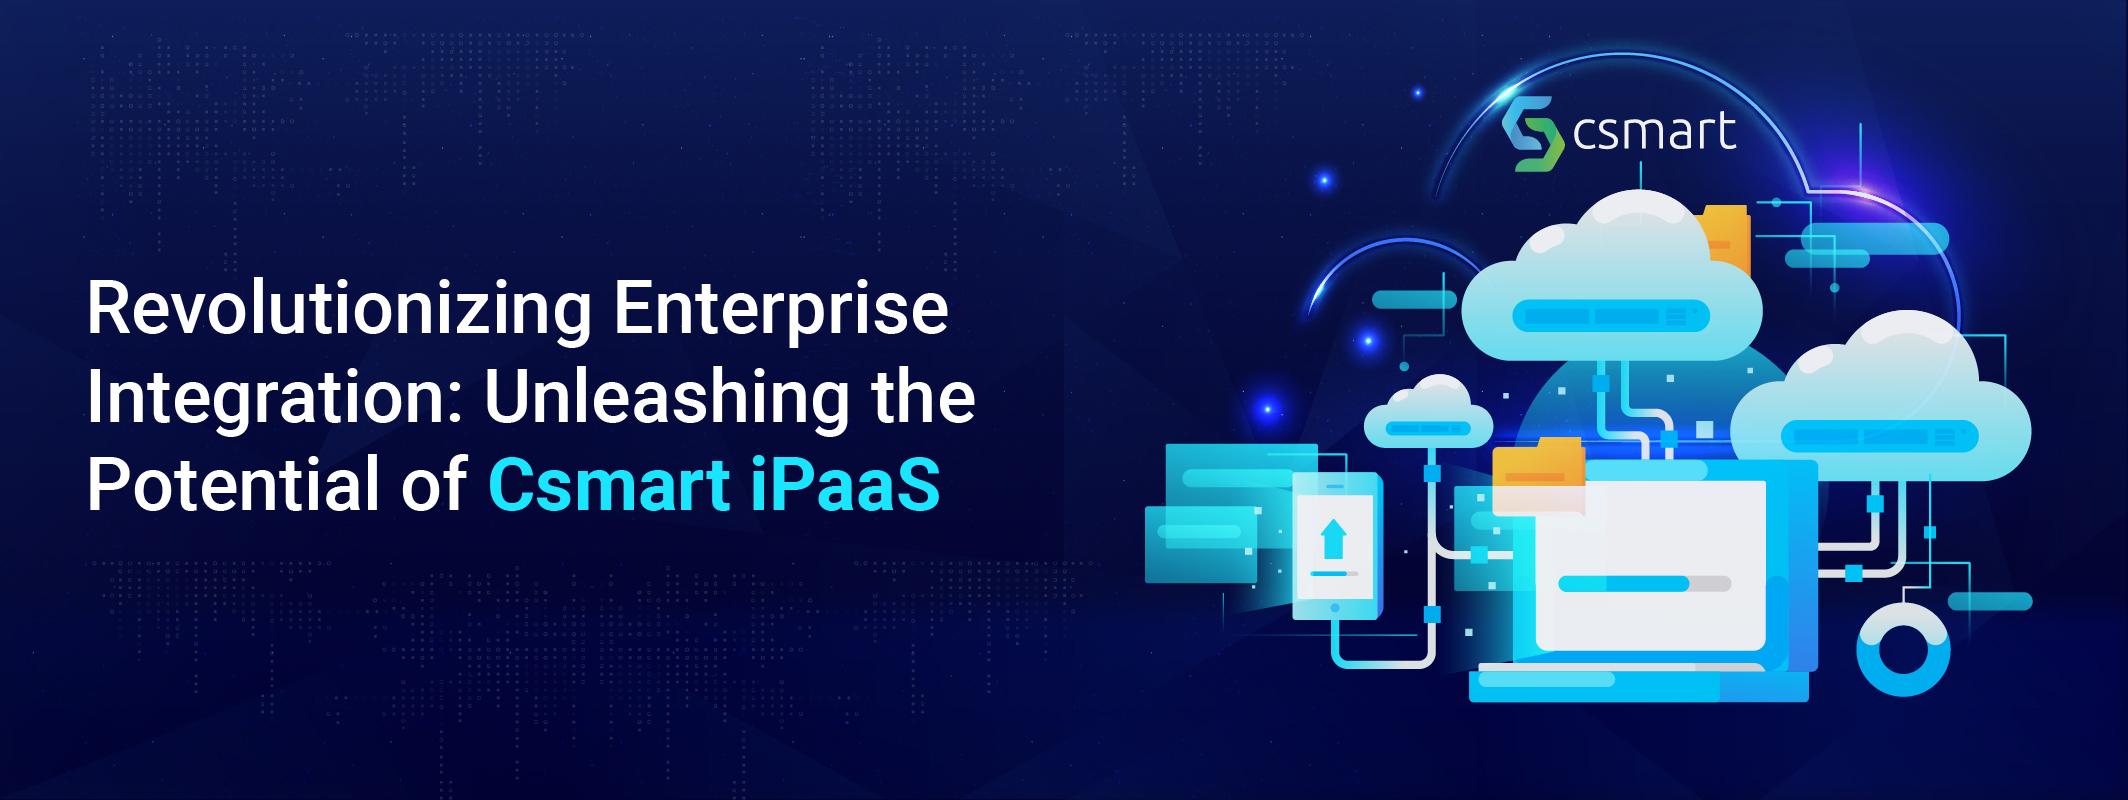 Revolutionizing Enterprise Integration: Unleashing the Potential of Csmart iPaaS